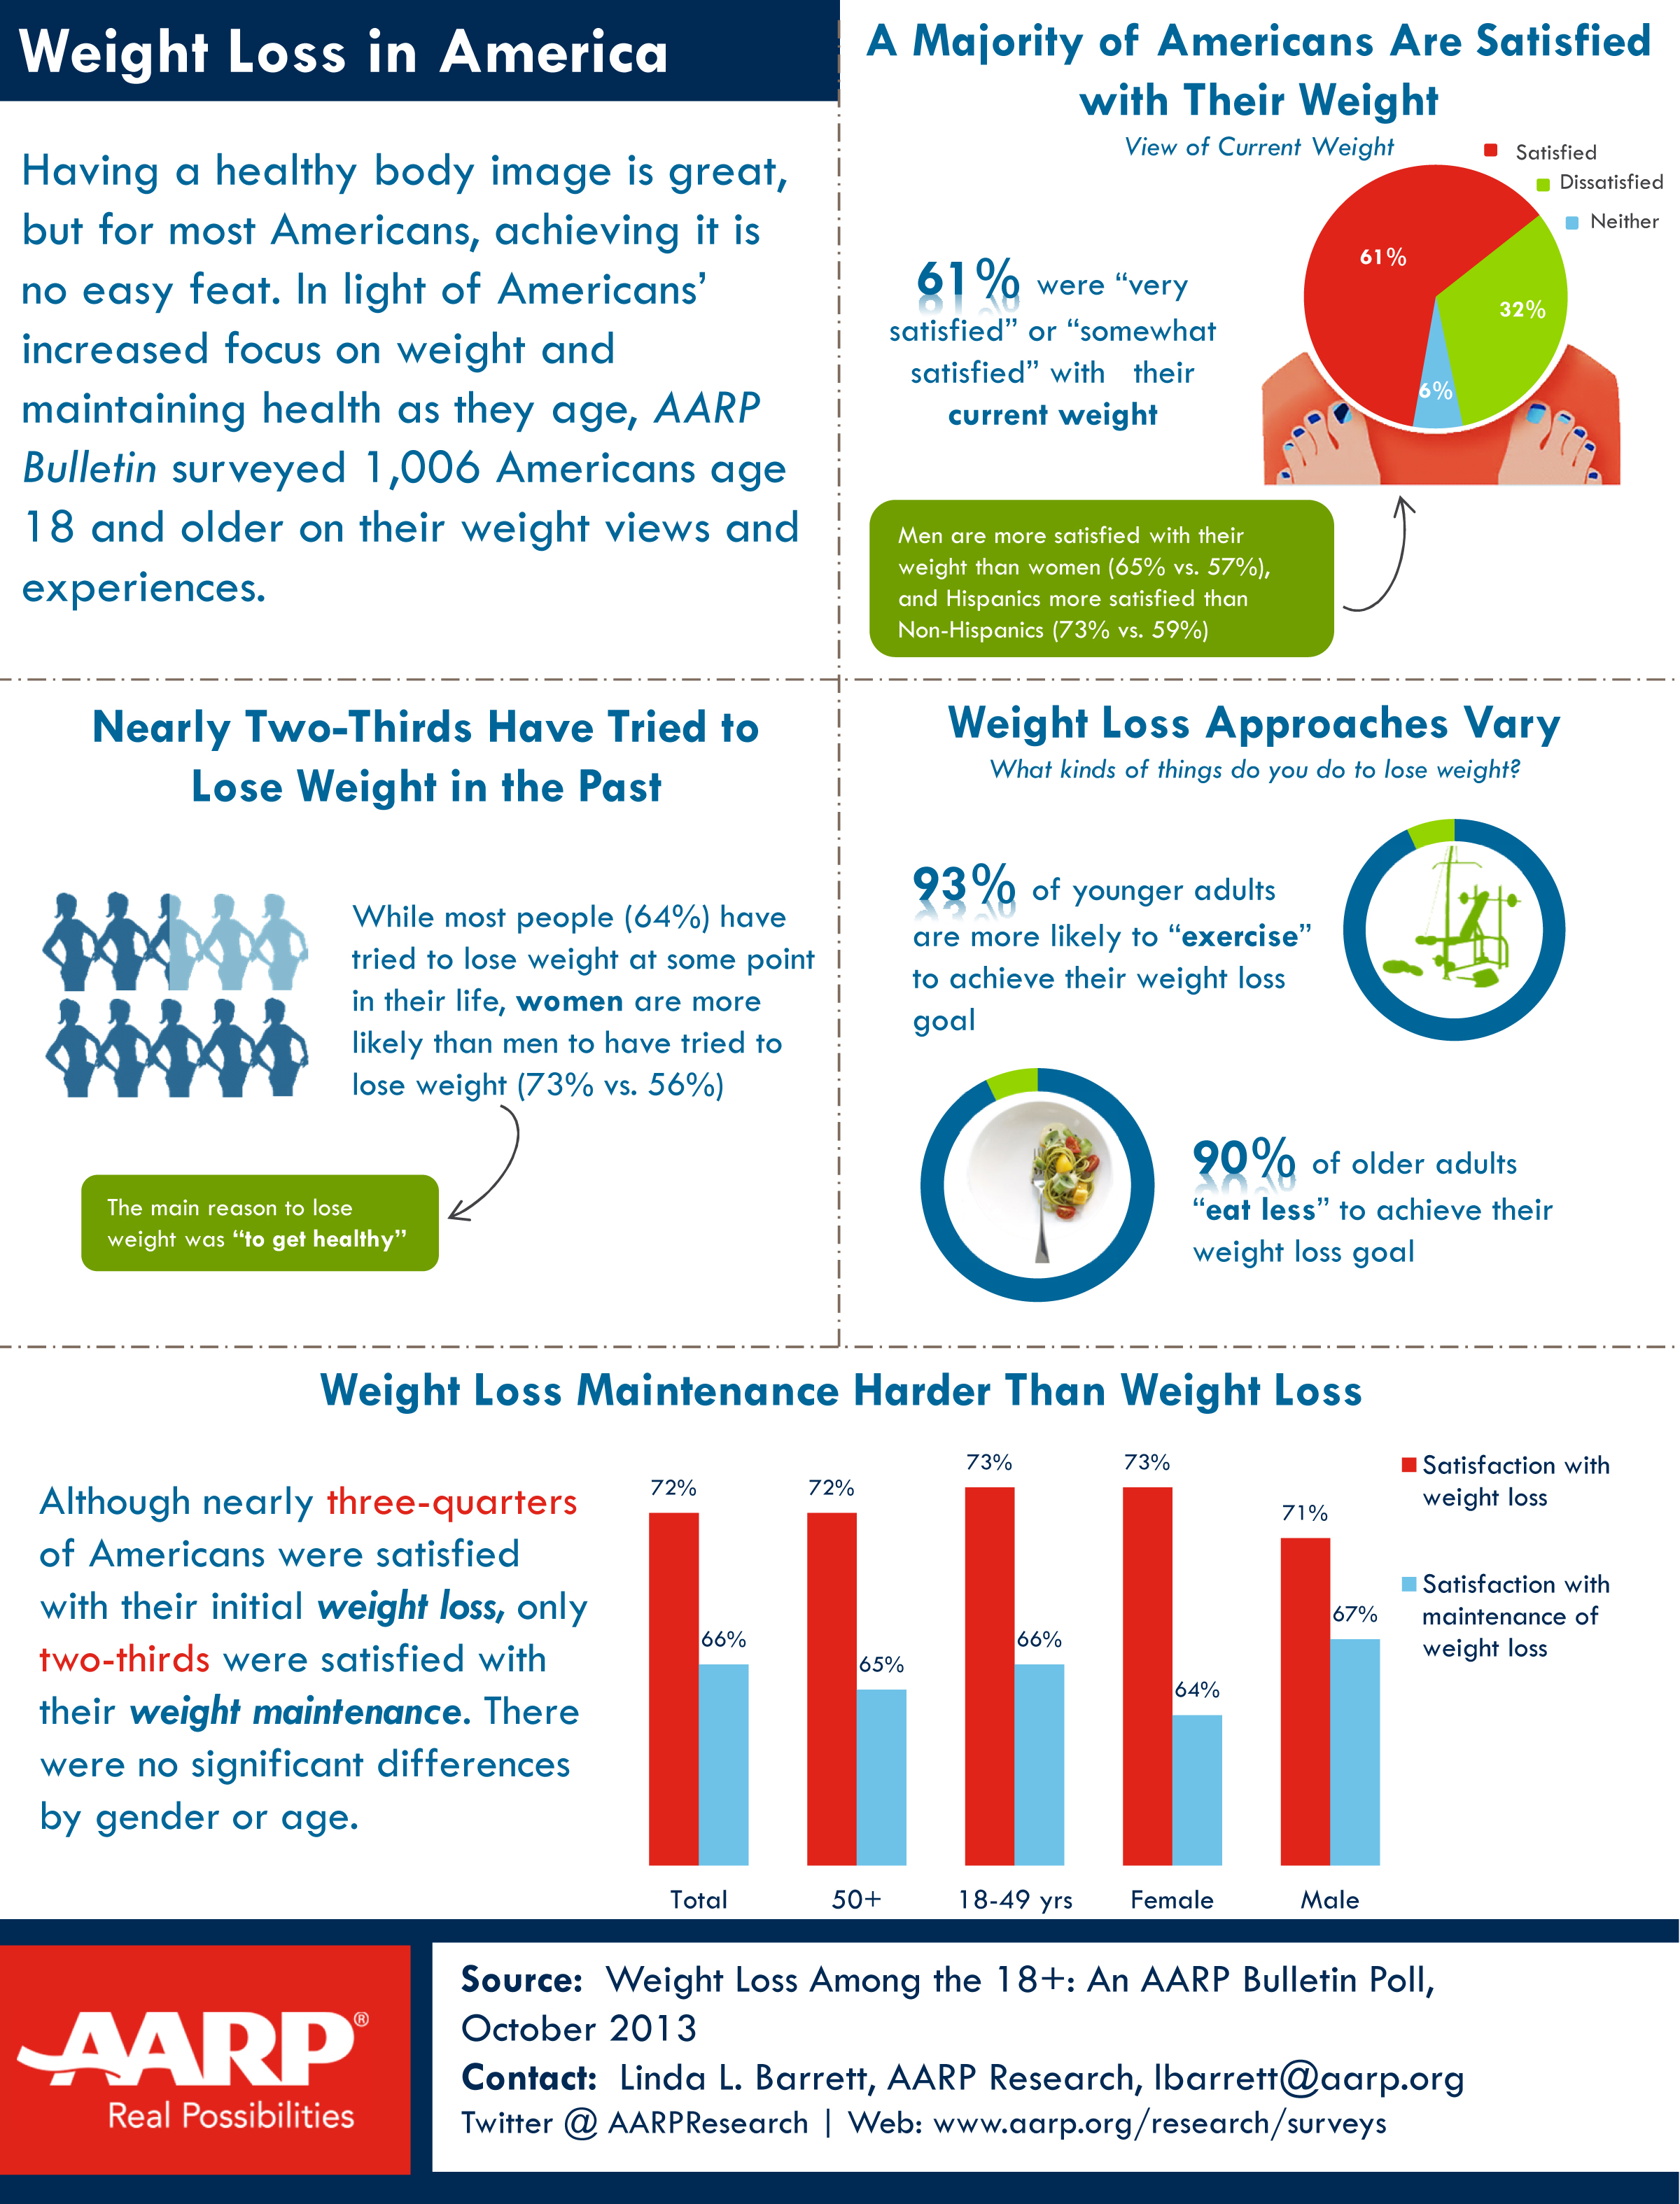 AARP Research weight loss poll fact sheet